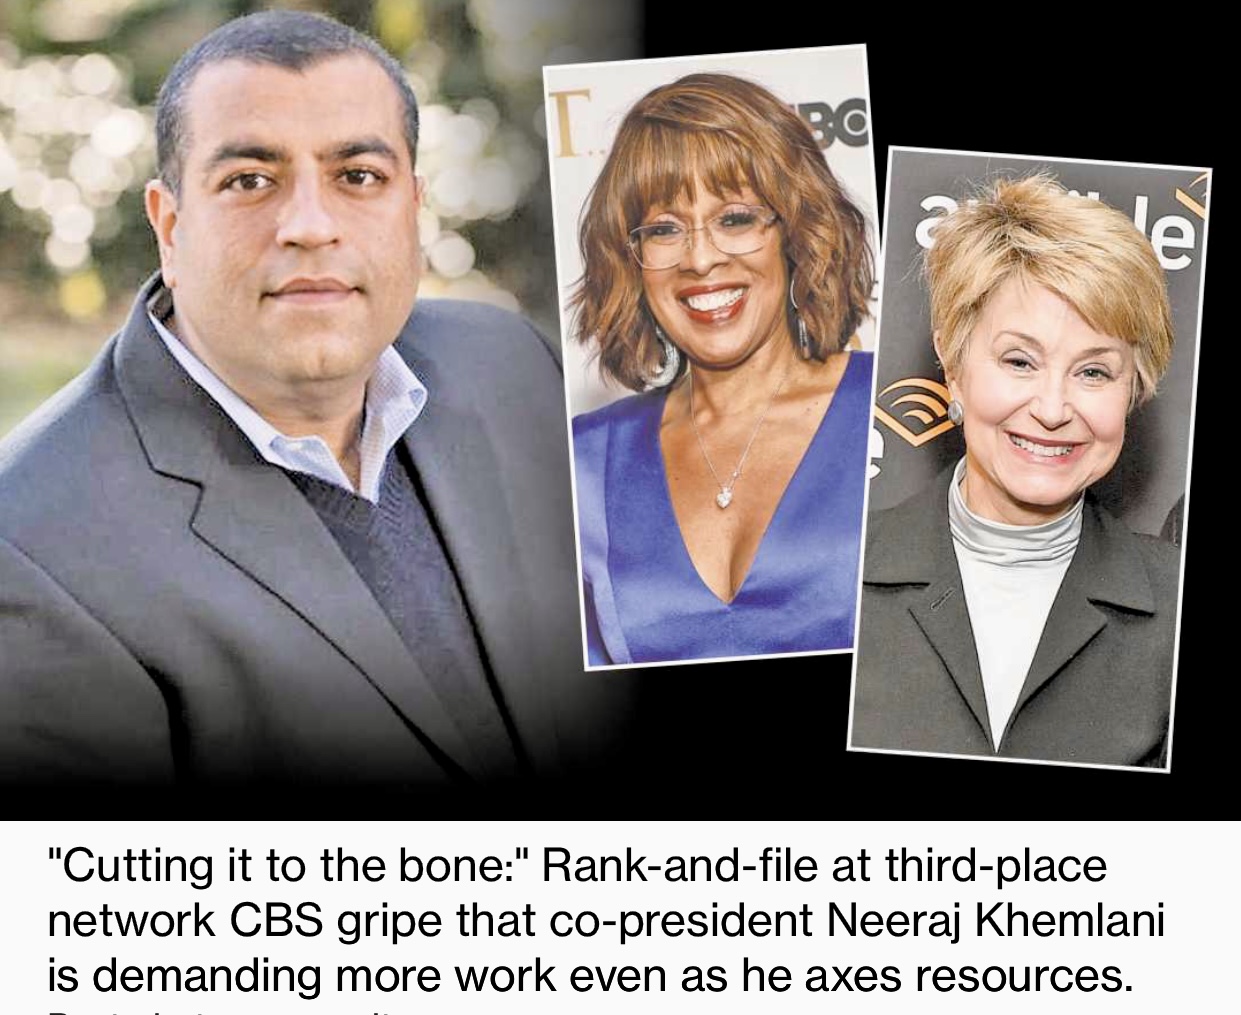 CBS News staffers - chafing under cost-slashing rude new boss Neeraj KhemlanI